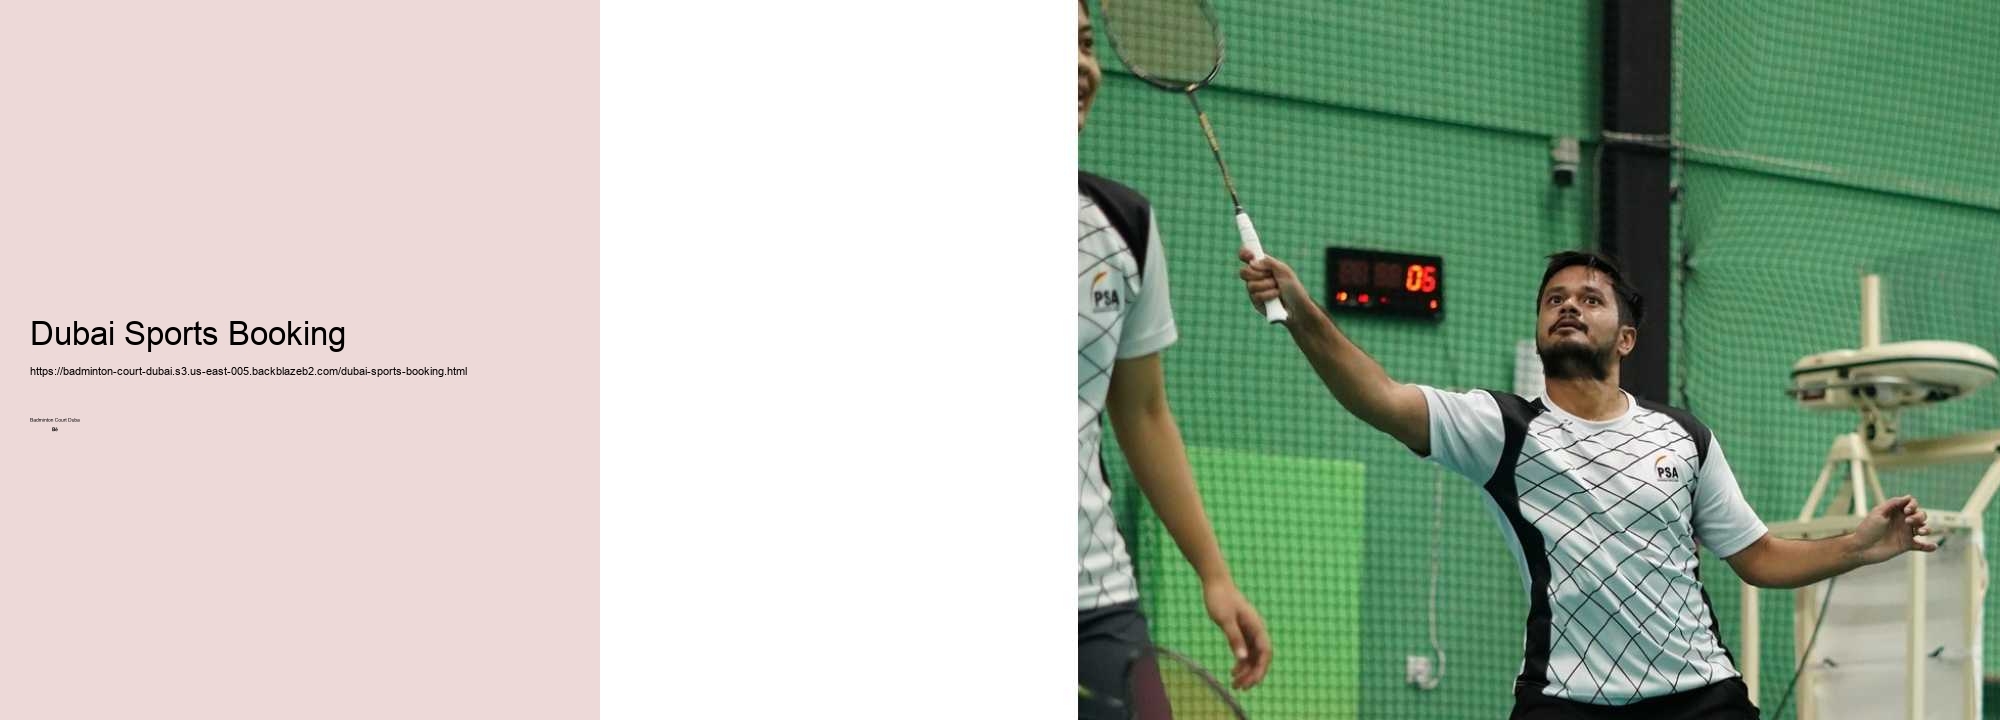 Badminton Coaching and Training Facilities in Dubai